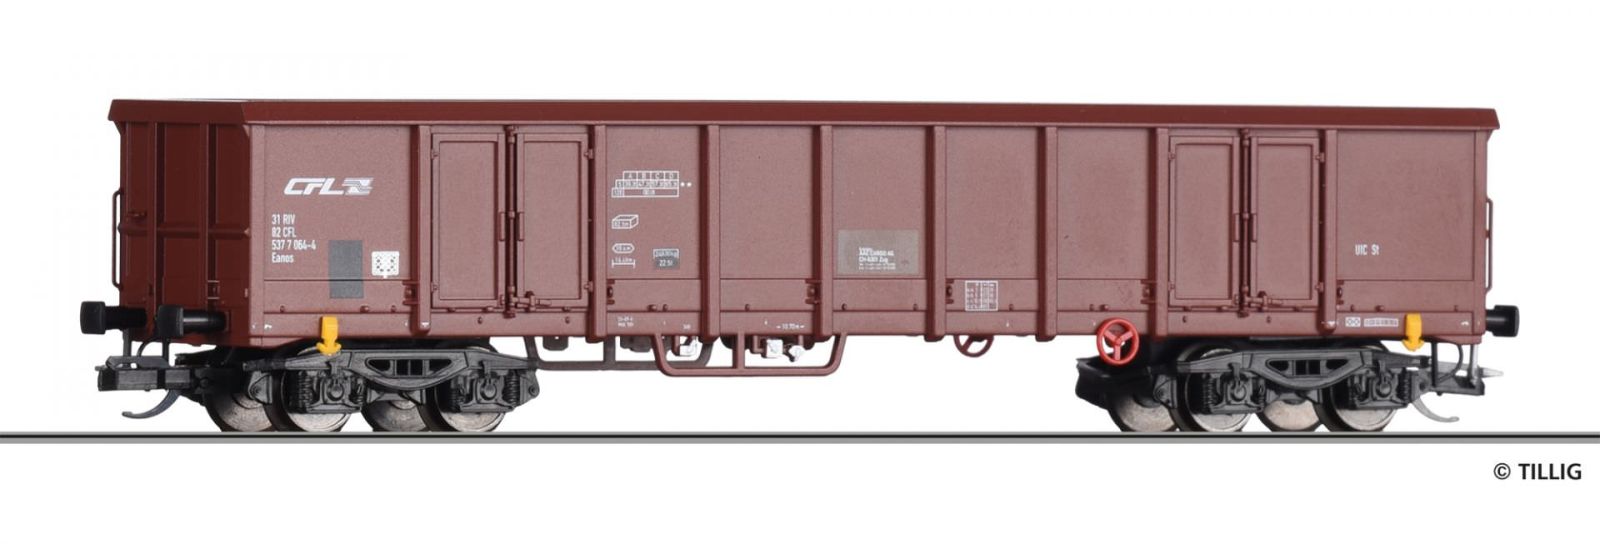 Offener Güterwagen CFL